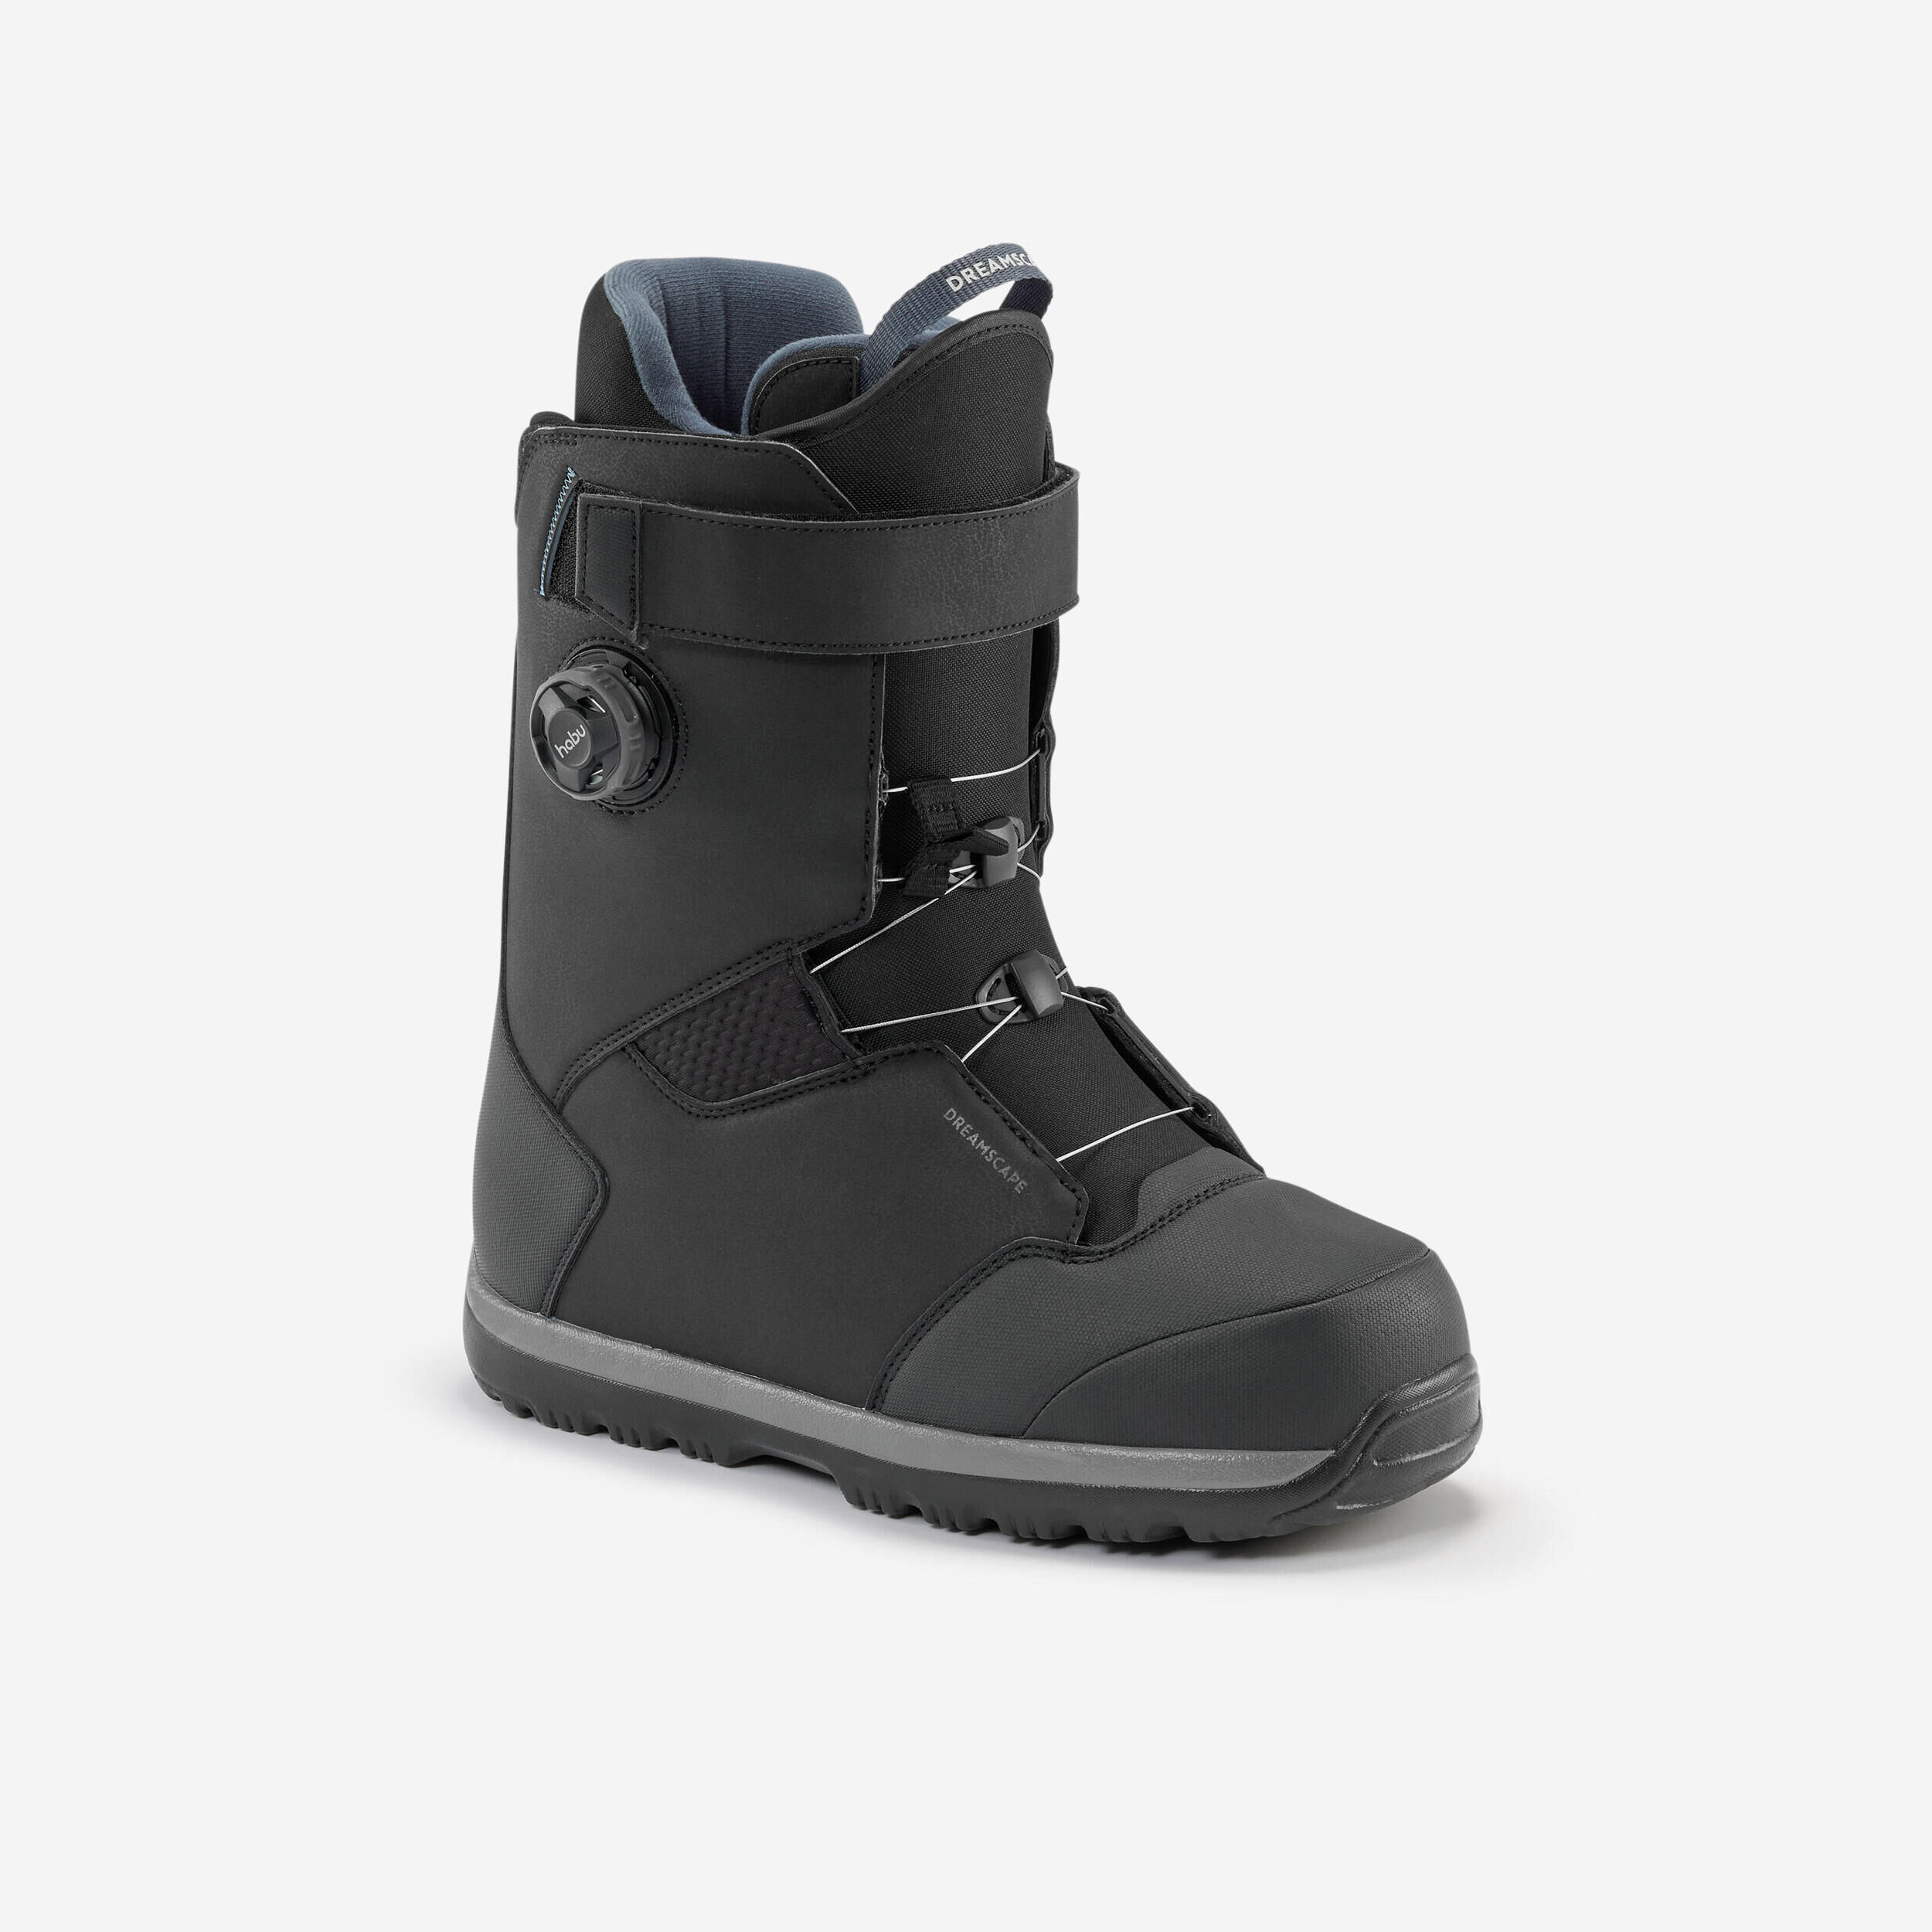 DREAMSCAPE Women's snowboard boots with adjustment wheel, medium flex - ALLROAD 500 black